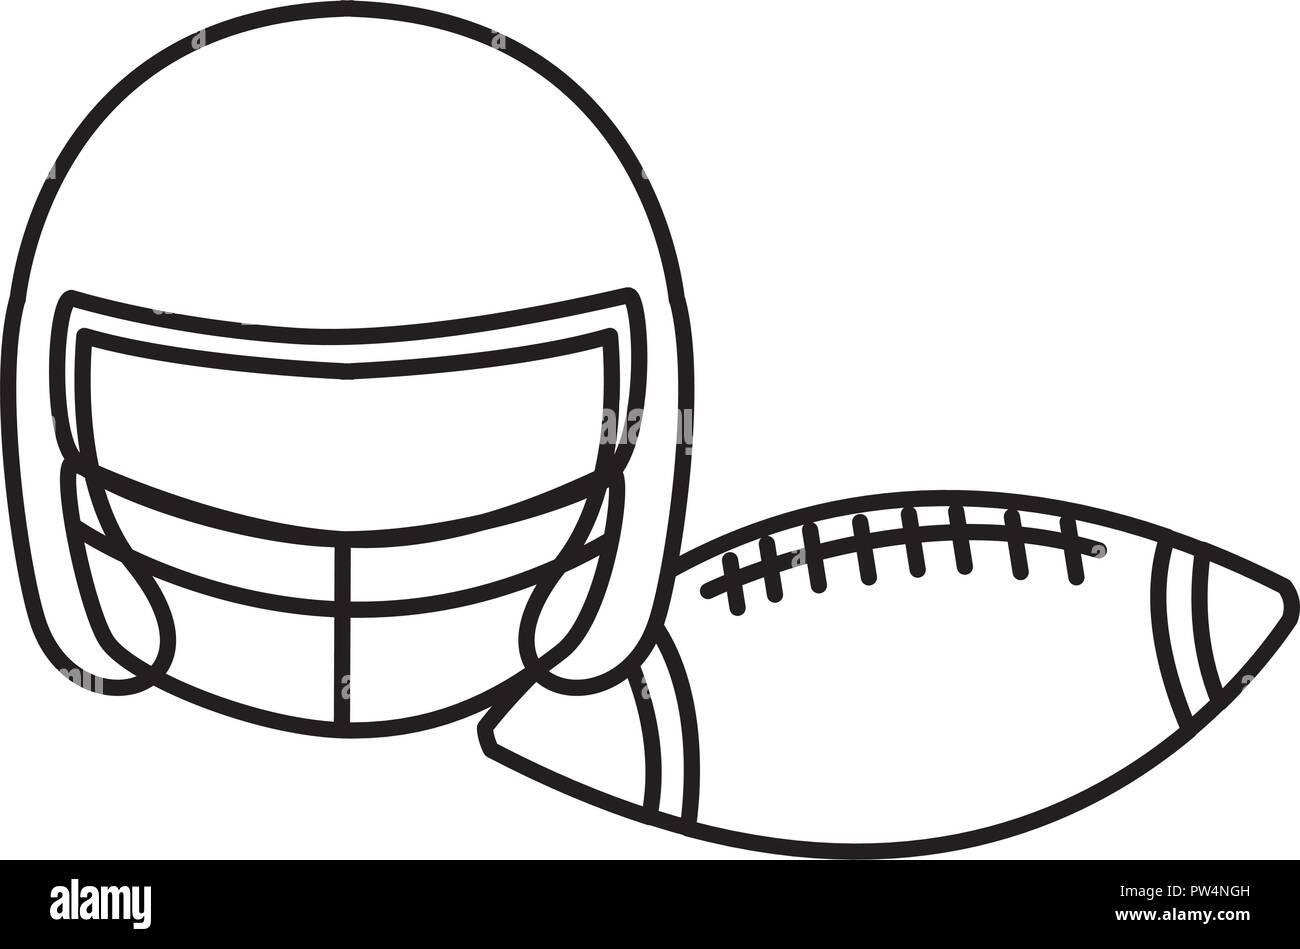 american football helmet and ball over white background, vector illustration Stock Vector